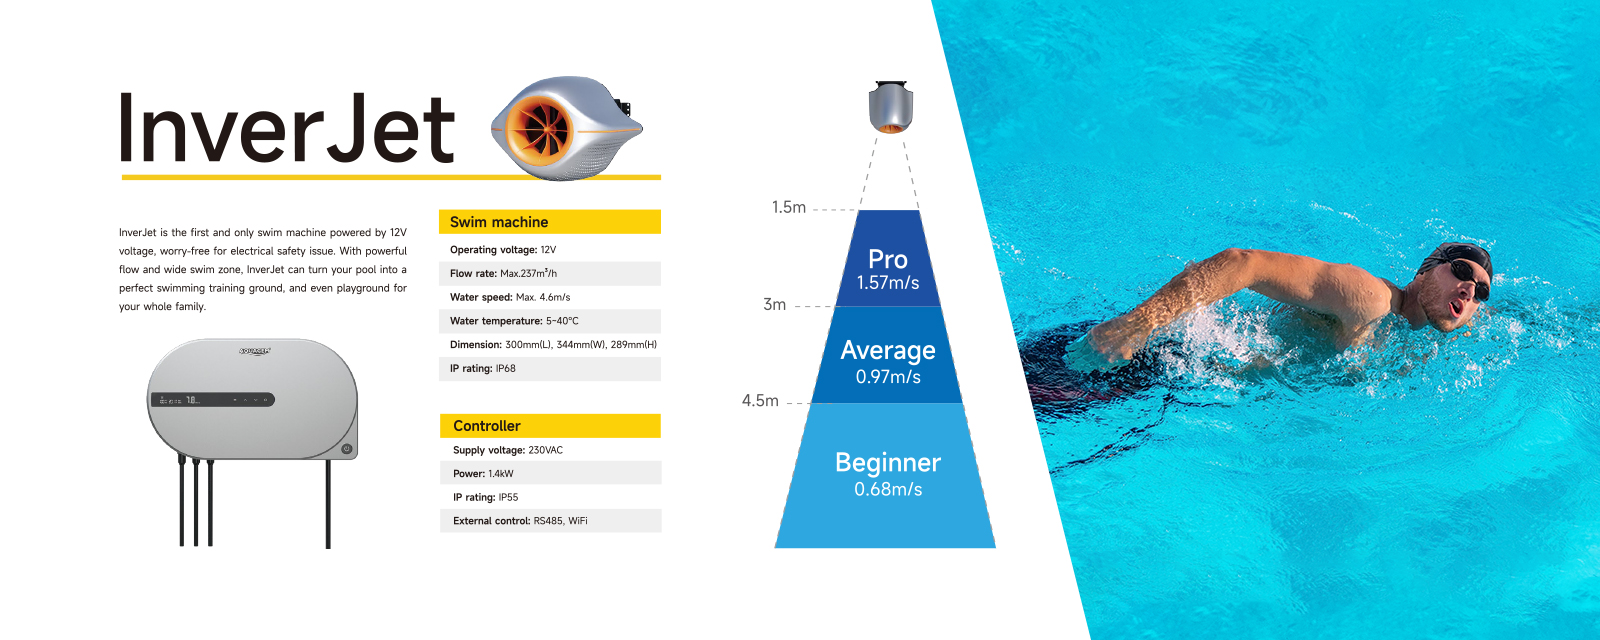 swimming Pool current machine inverjet - First & Only 12VSwim Machine